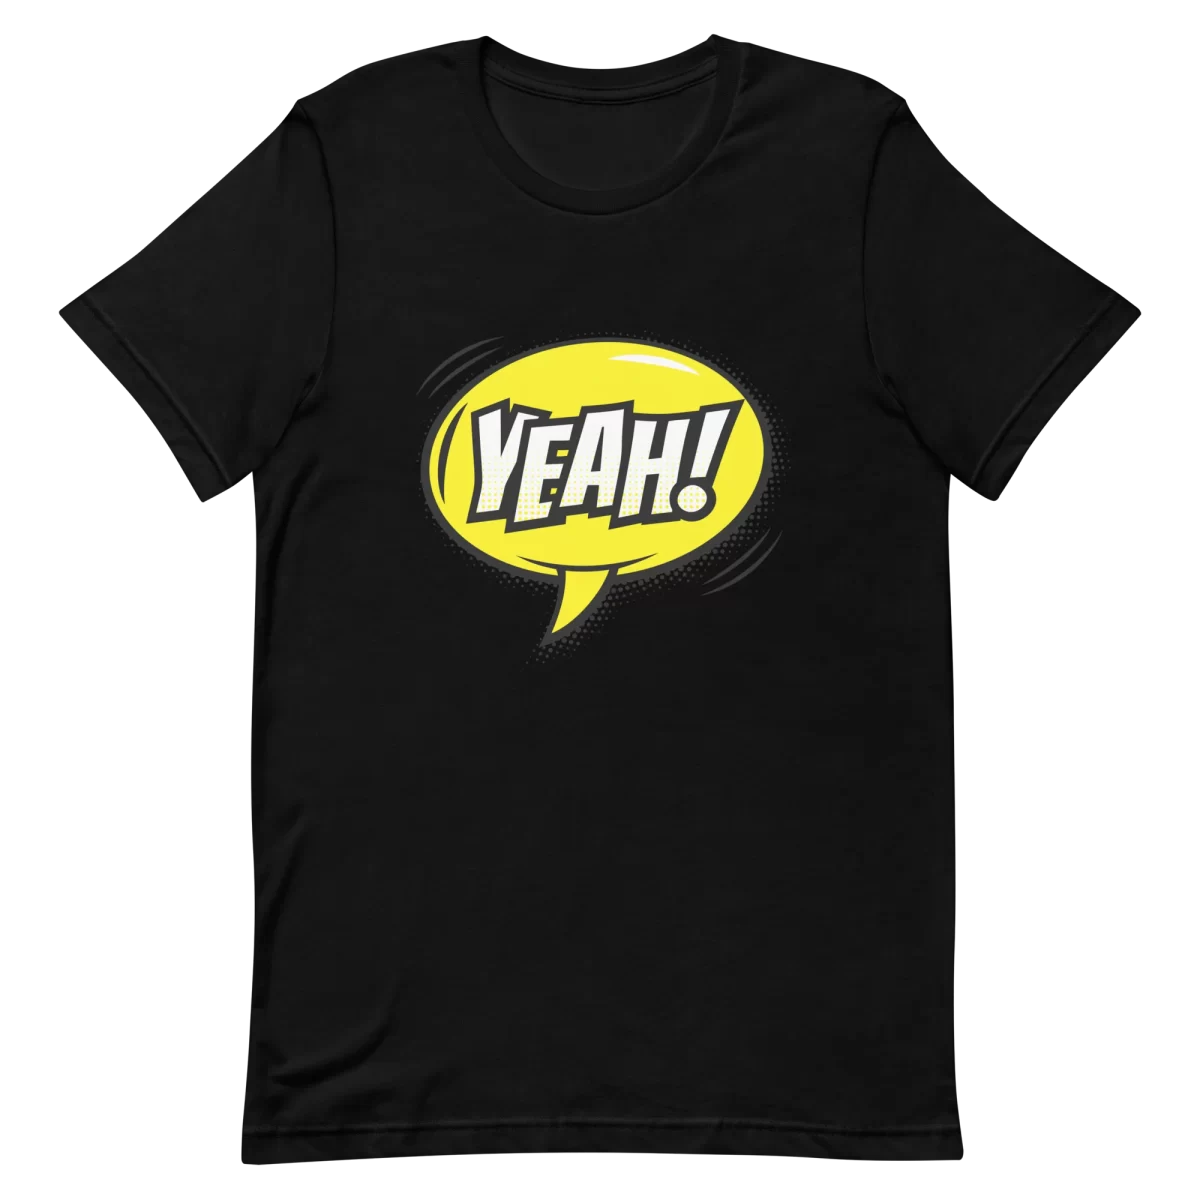 Unisex T-Shirt - YEAH! - Black